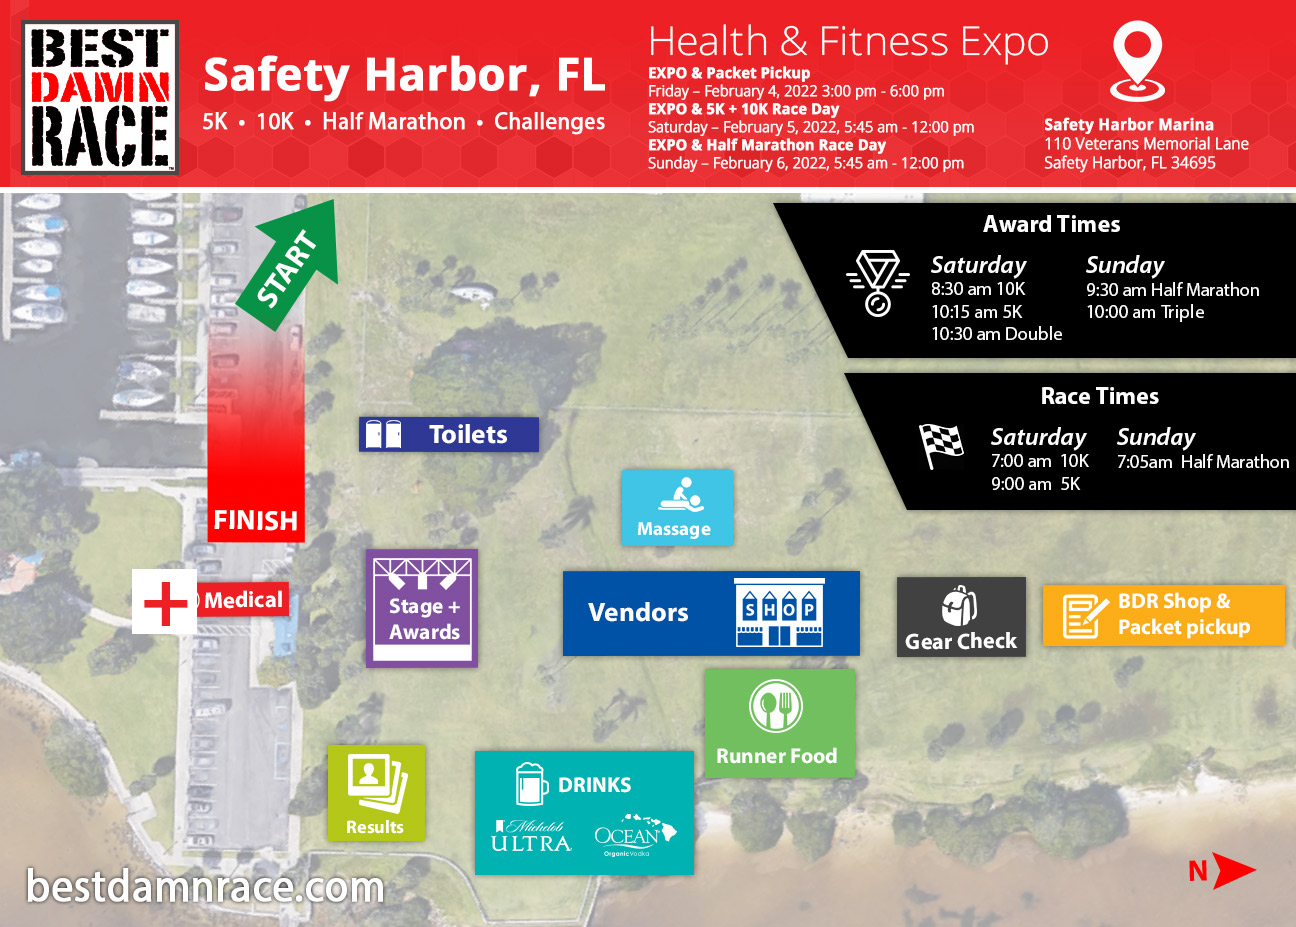 2022 Expo & Venue - Safety Harbor, FL Best Damn Race